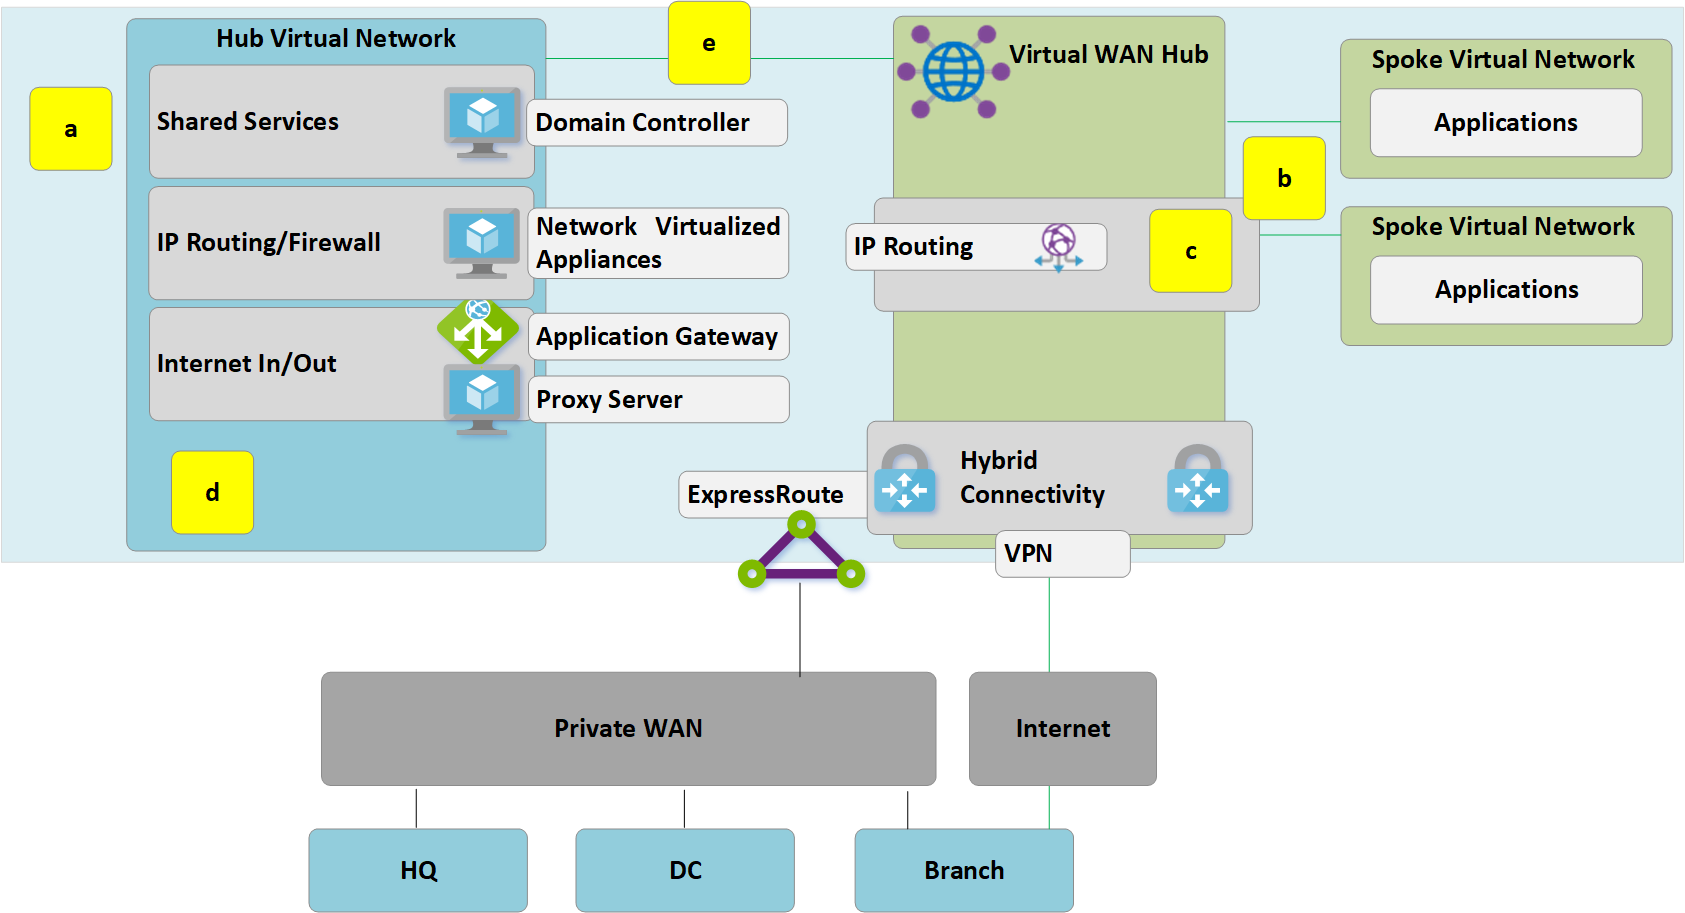 Overgang van connectiviteit naar Virtual WAN hub